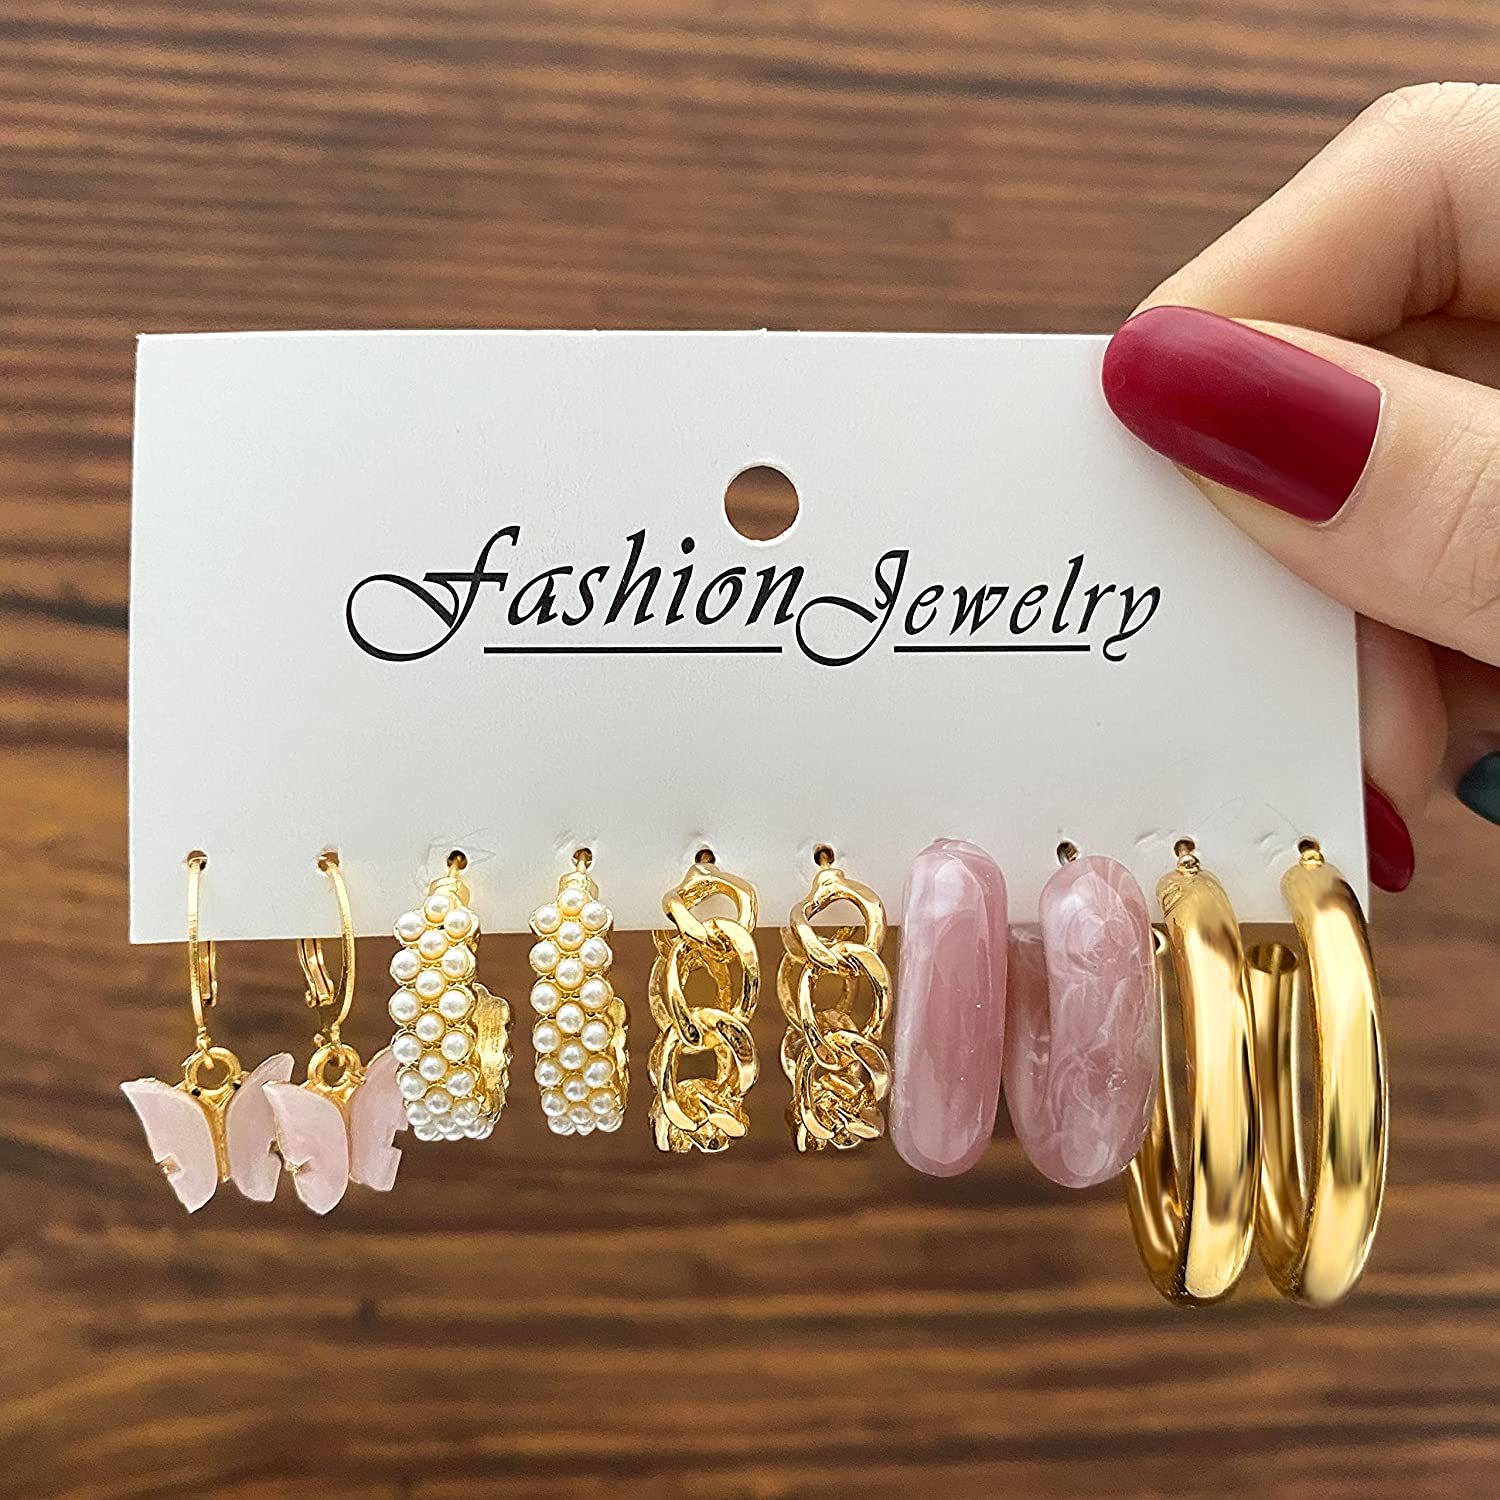 32 Pairs Gold Hoop Earrings Set for Women Girls, Fashion Chain Link Hoop Stud Drop Dangle Earrings Boho Statement Hypoallergenic Earrings for Christmas Jewelry Gift